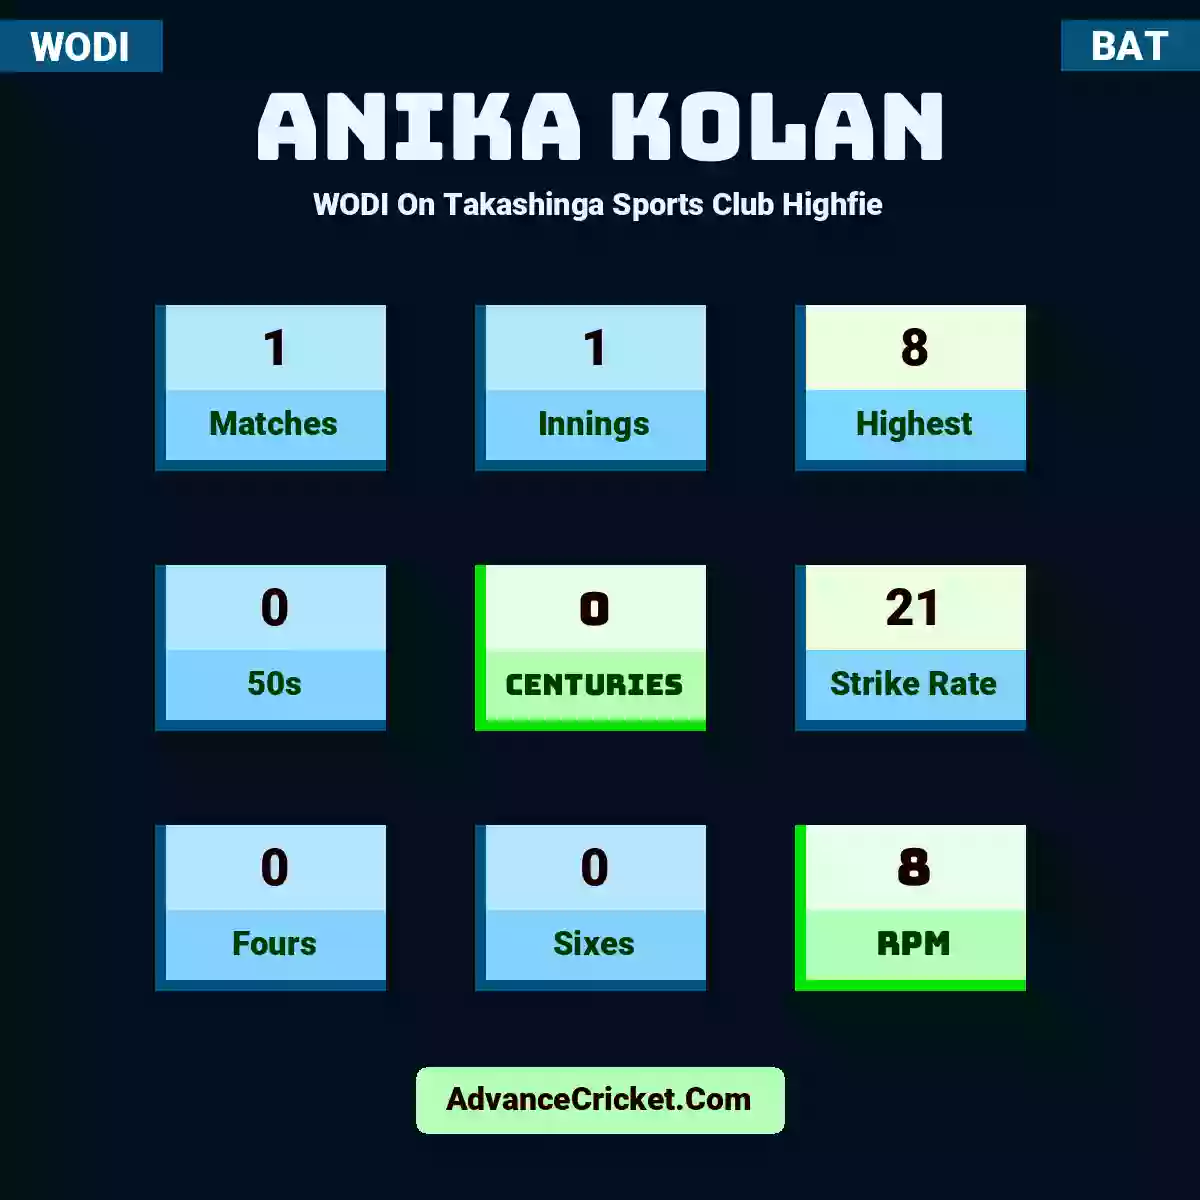 Anika Kolan WODI  On Takashinga Sports Club Highfie, Anika Kolan played 1 matches, scored 8 runs as highest, 0 half-centuries, and 0 centuries, with a strike rate of 21. A.Kolan hit 0 fours and 0 sixes, with an RPM of 8.